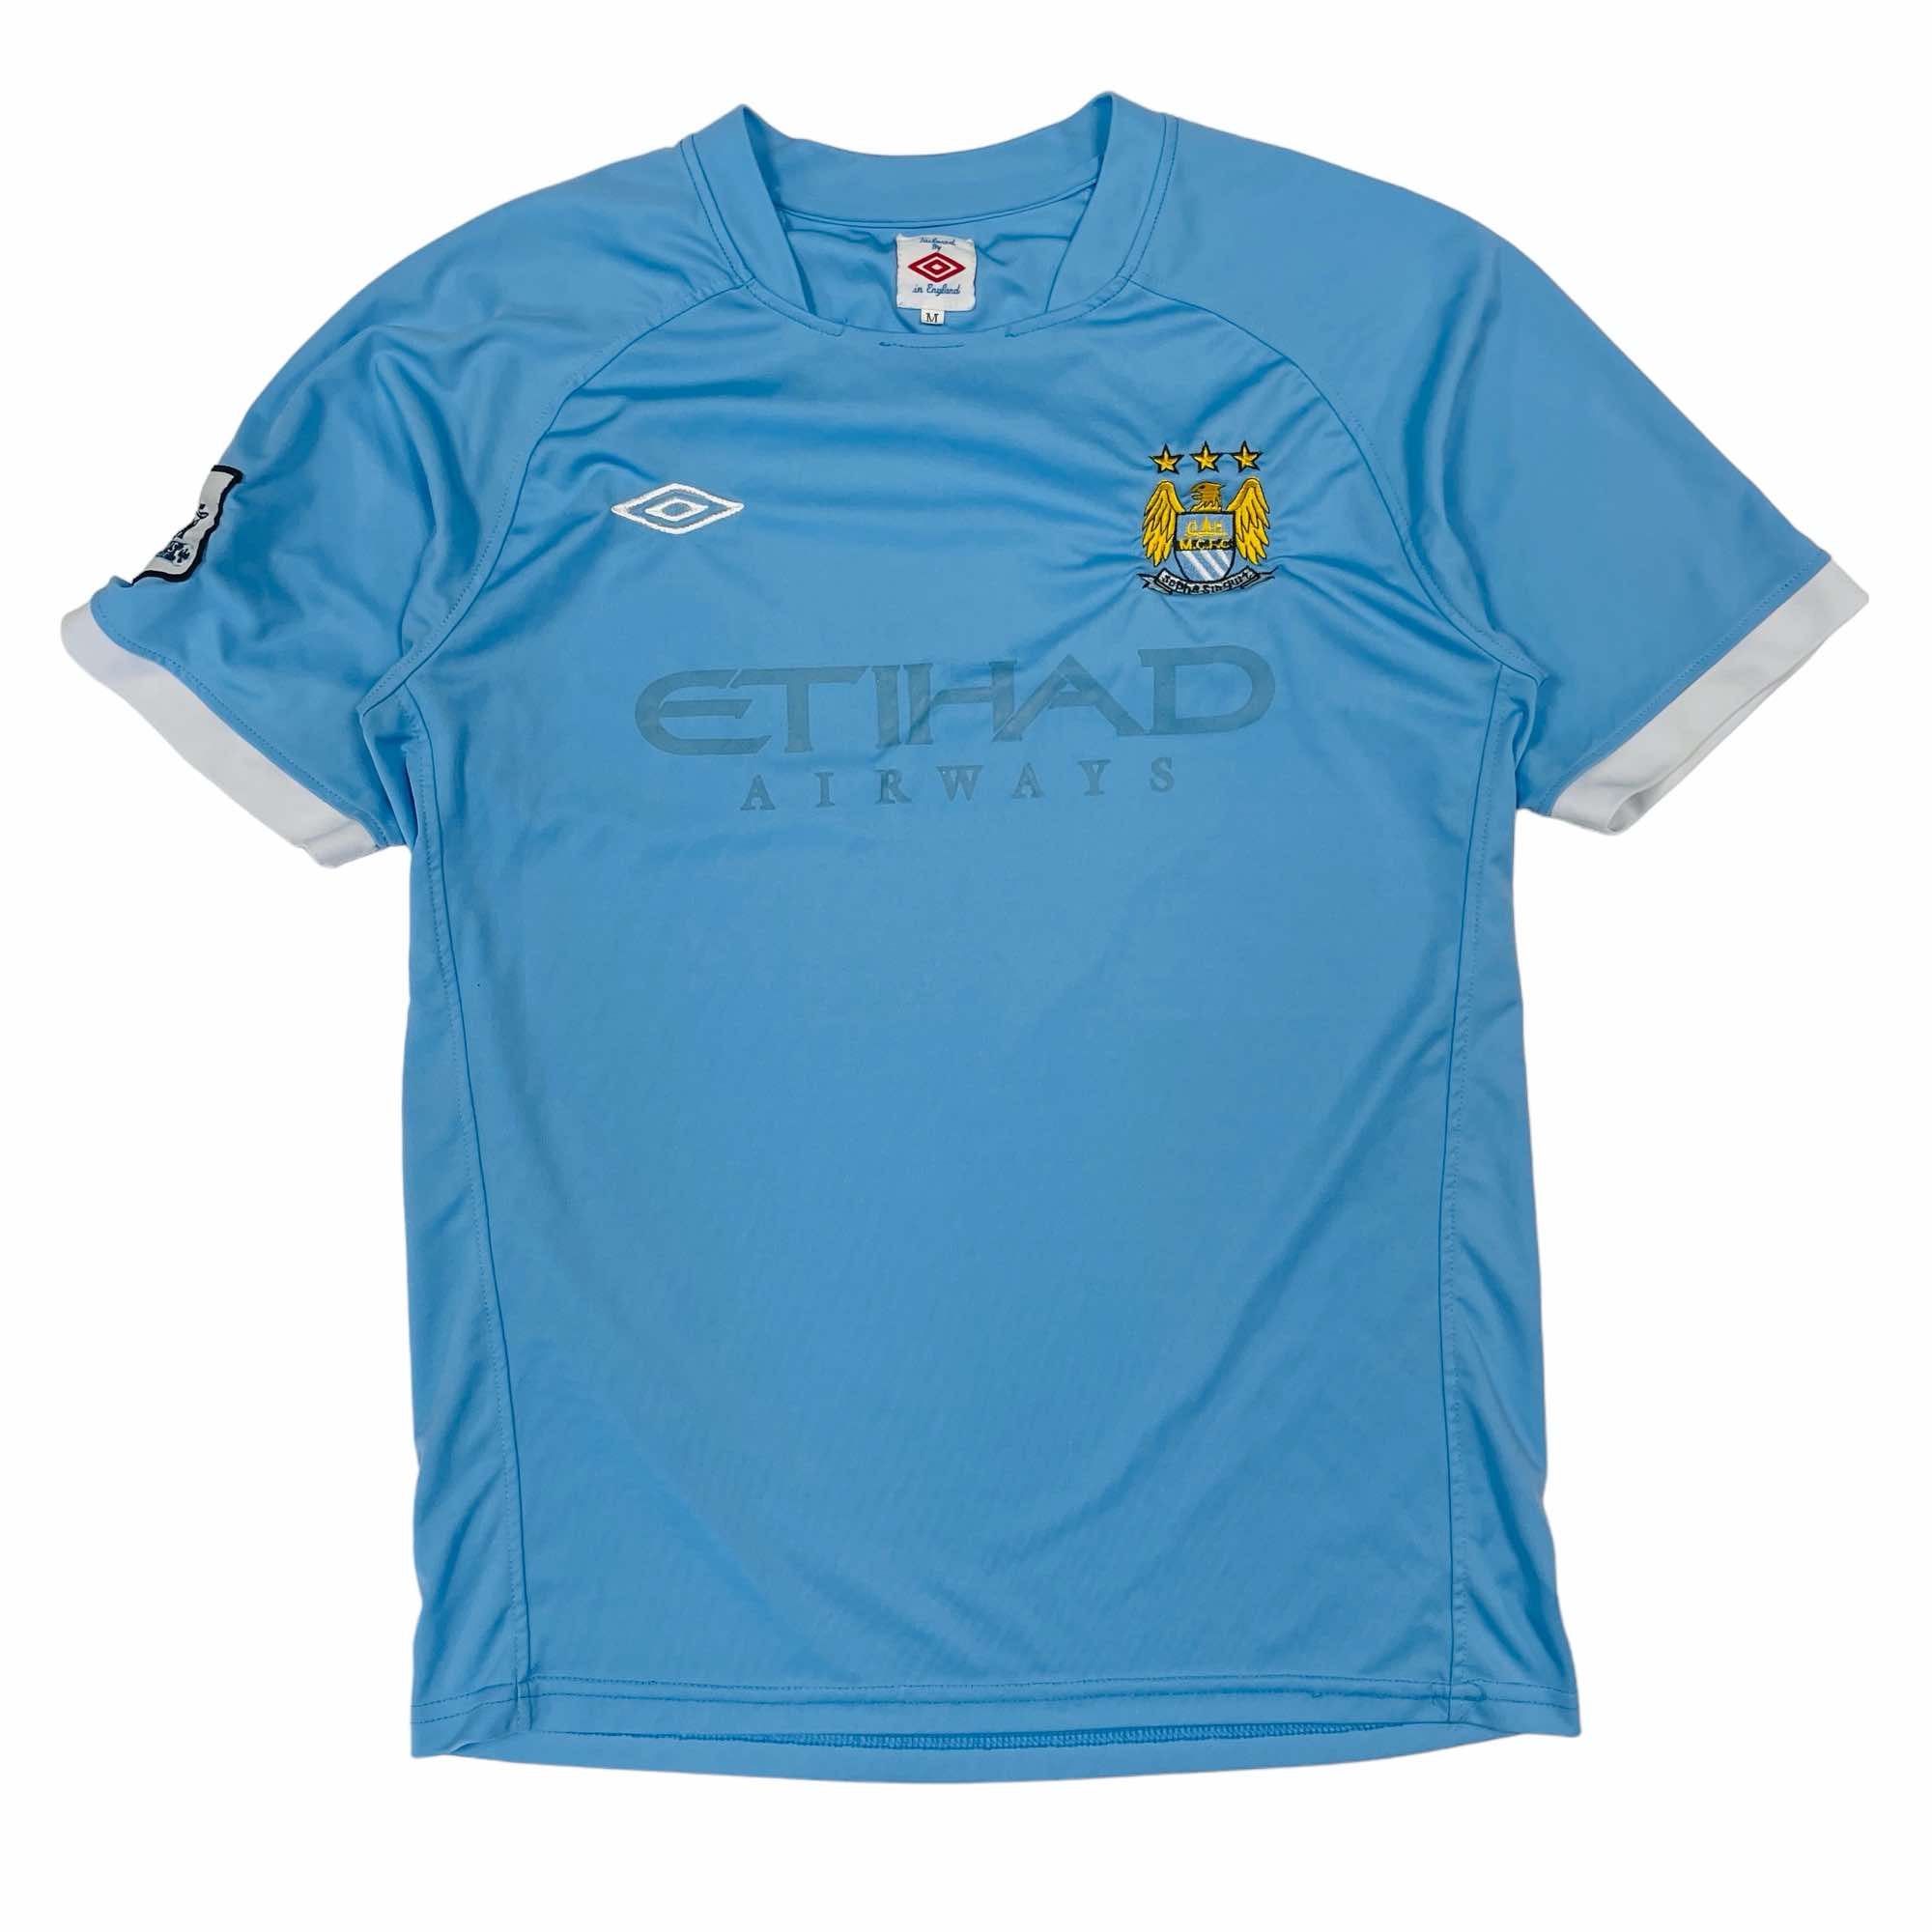 Manchester City 2010/11 Umbro Shirt - Medium